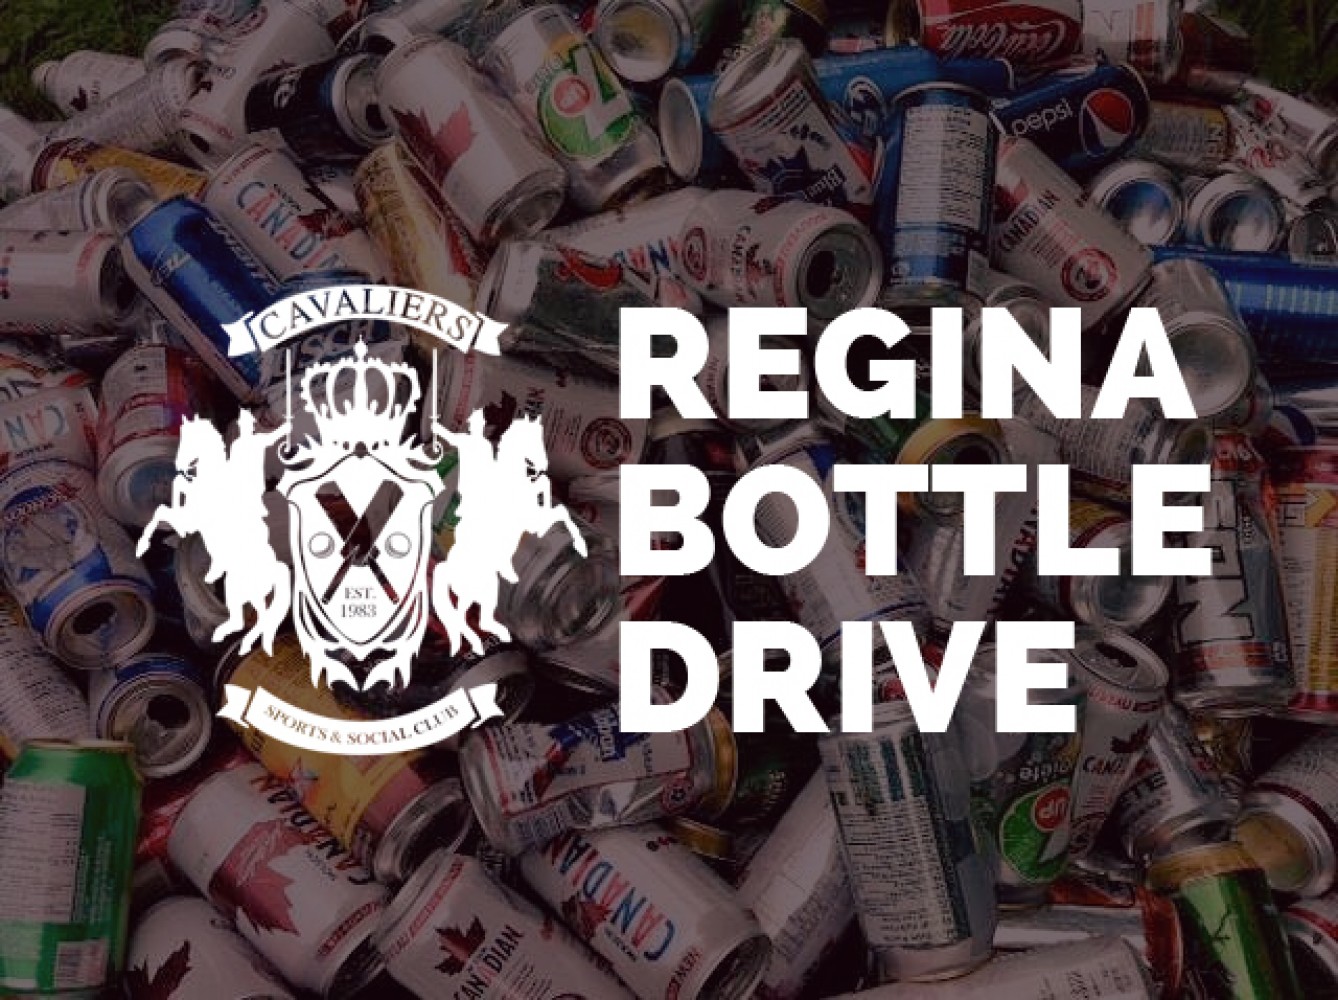 Bottle Drive: Donate your empties to help Regina's oldest cricket club